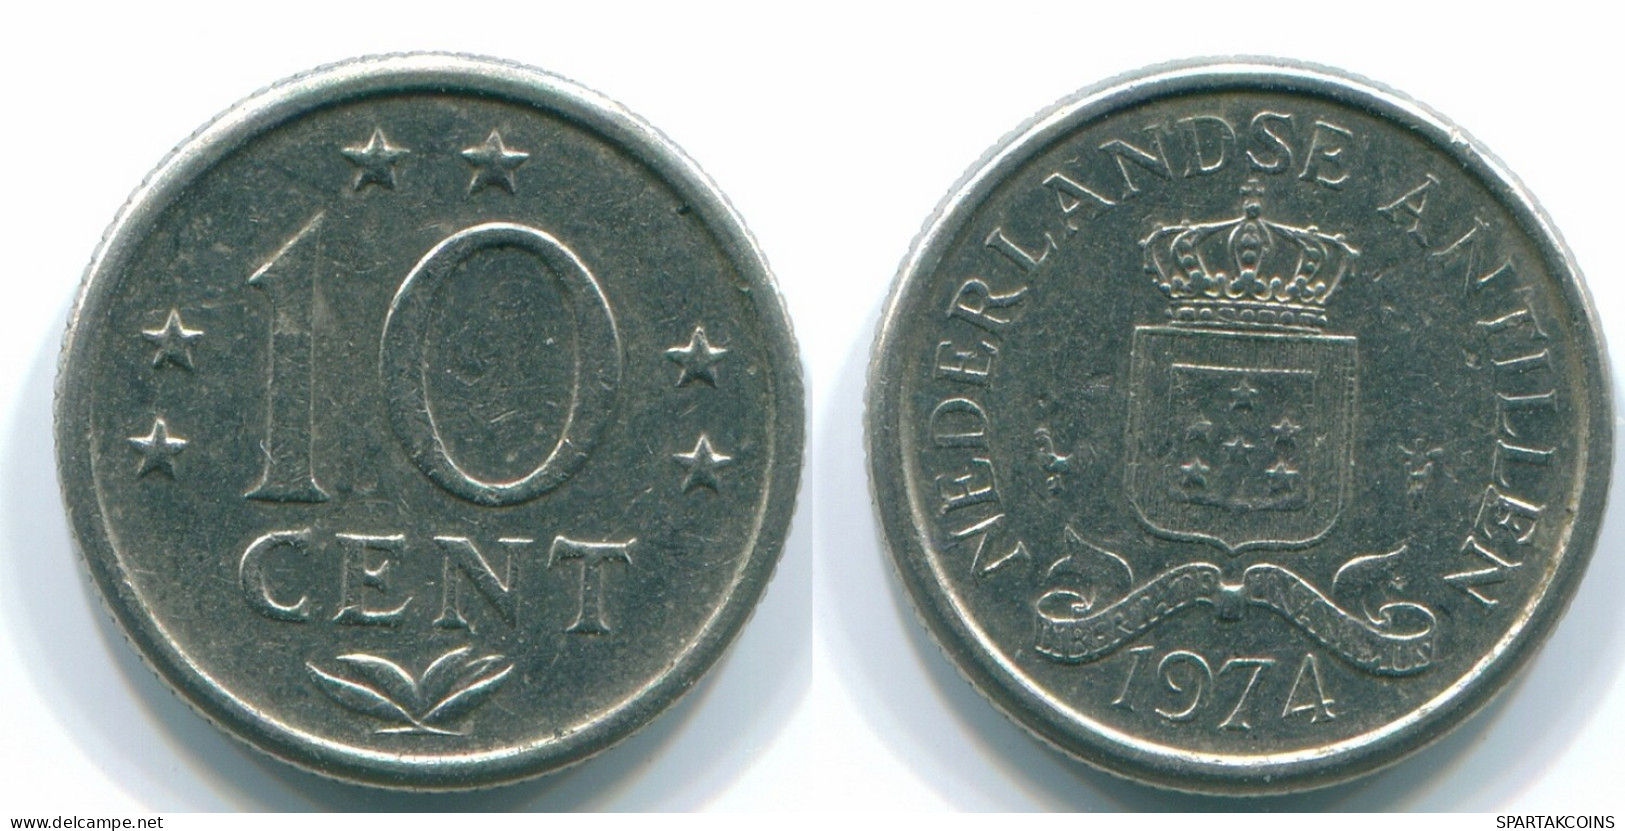 10 CENTS 1974 NETHERLANDS ANTILLES Nickel Colonial Coin #S13532.U.A - Antilles Néerlandaises